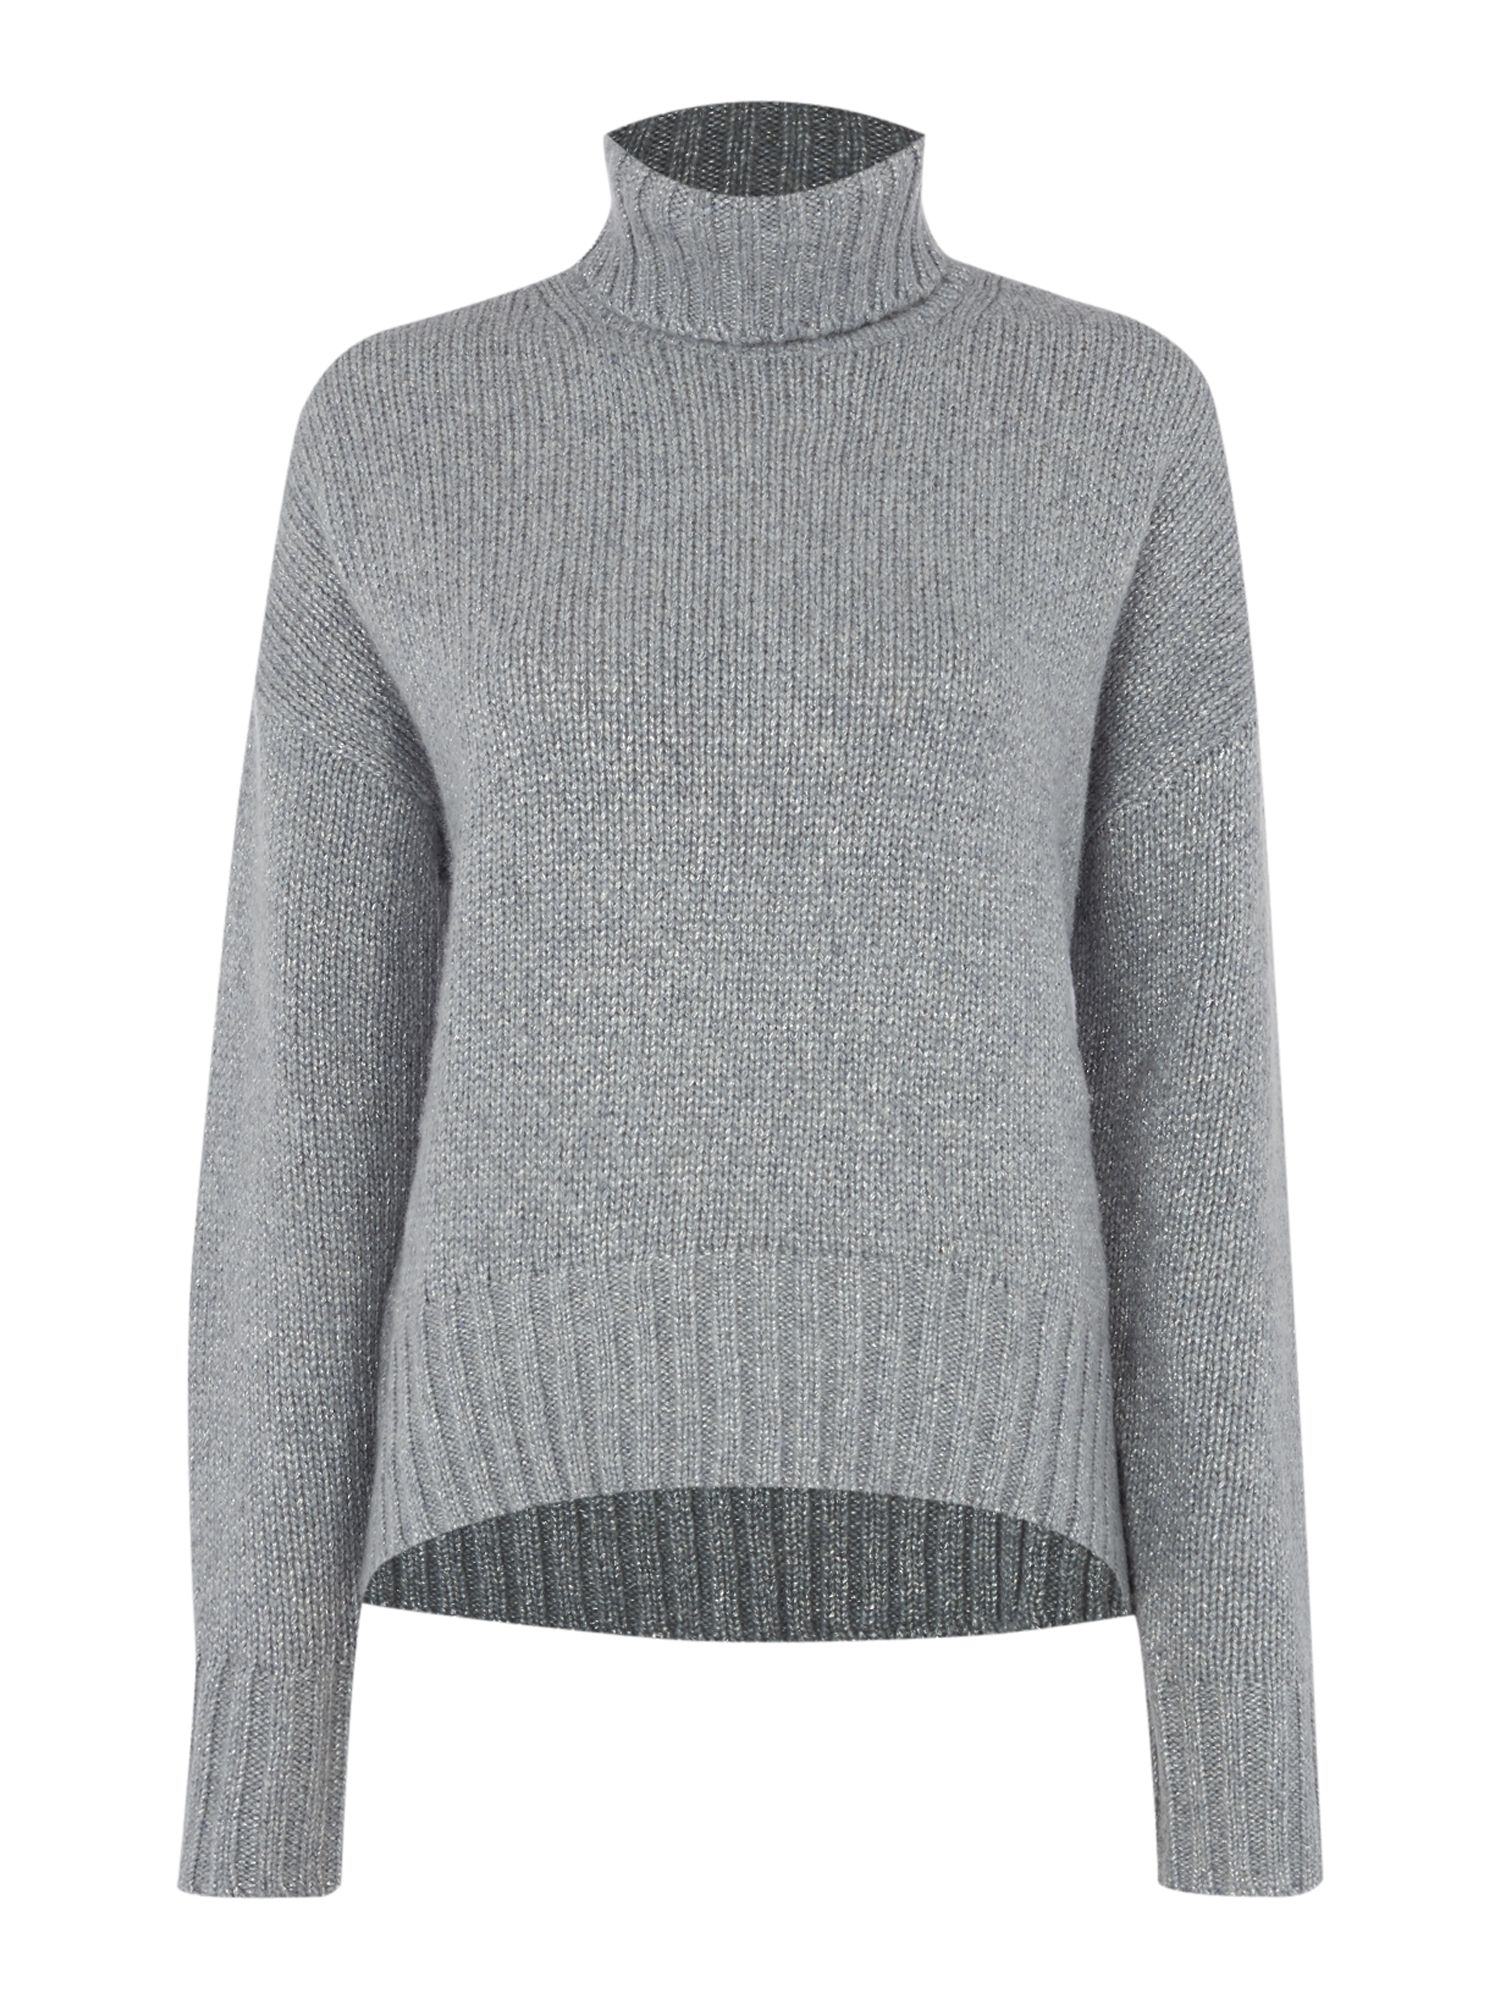 Michael kors Long Sleeve Lurex Turtleneck Knit Sweater in Gray (Grey ...